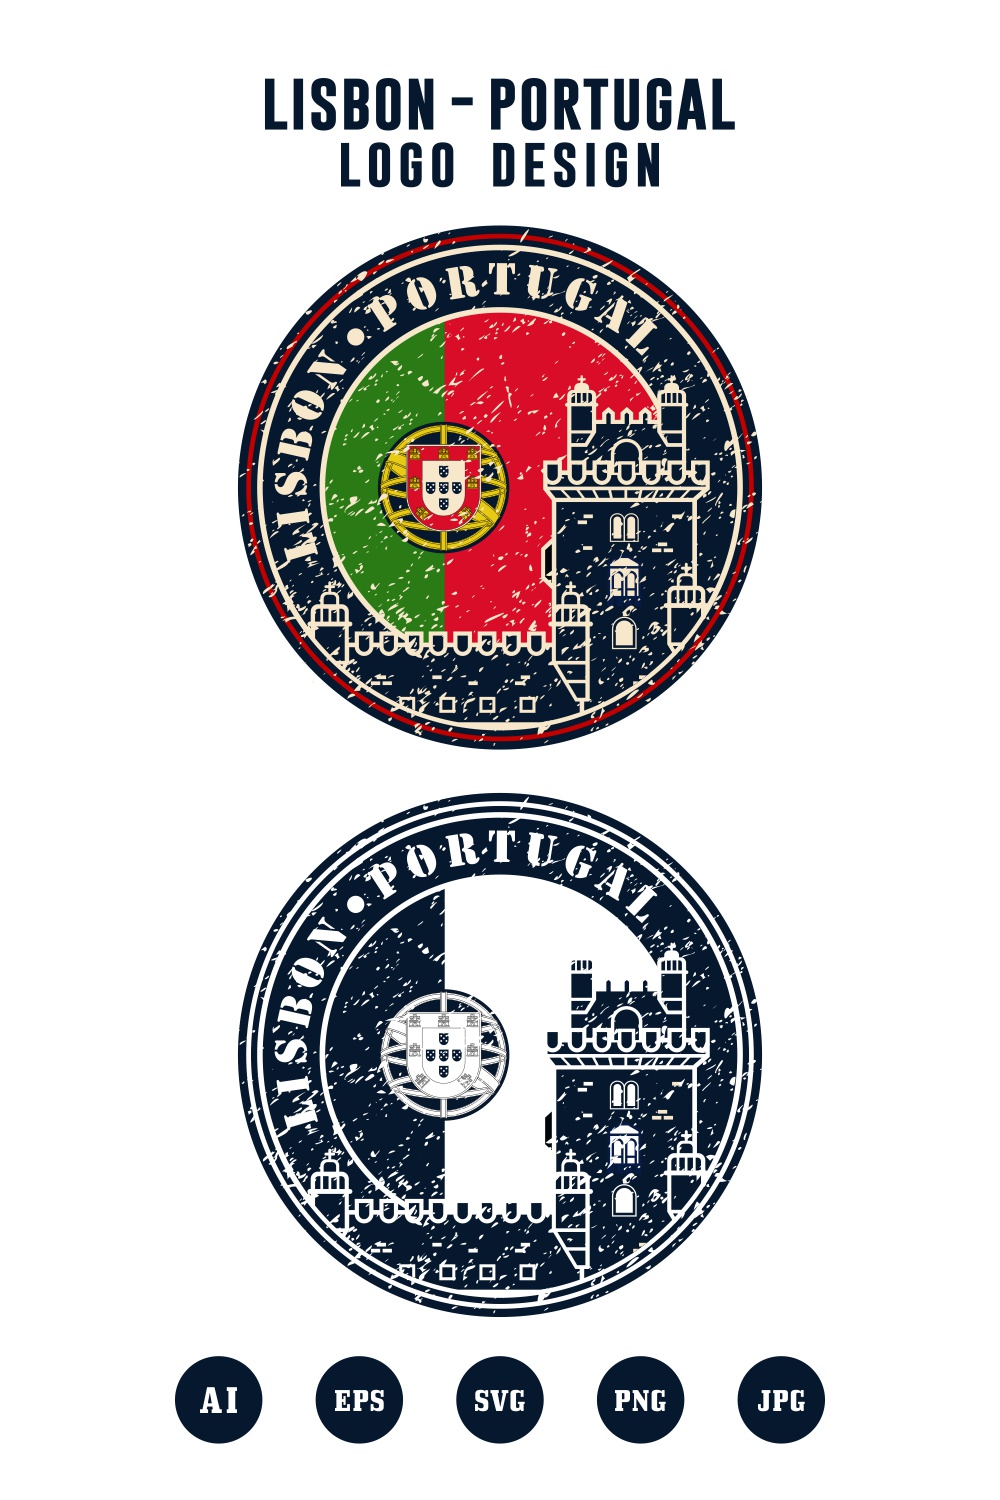 Lisbon portugal vector logo design collection - $4 pinterest preview image.